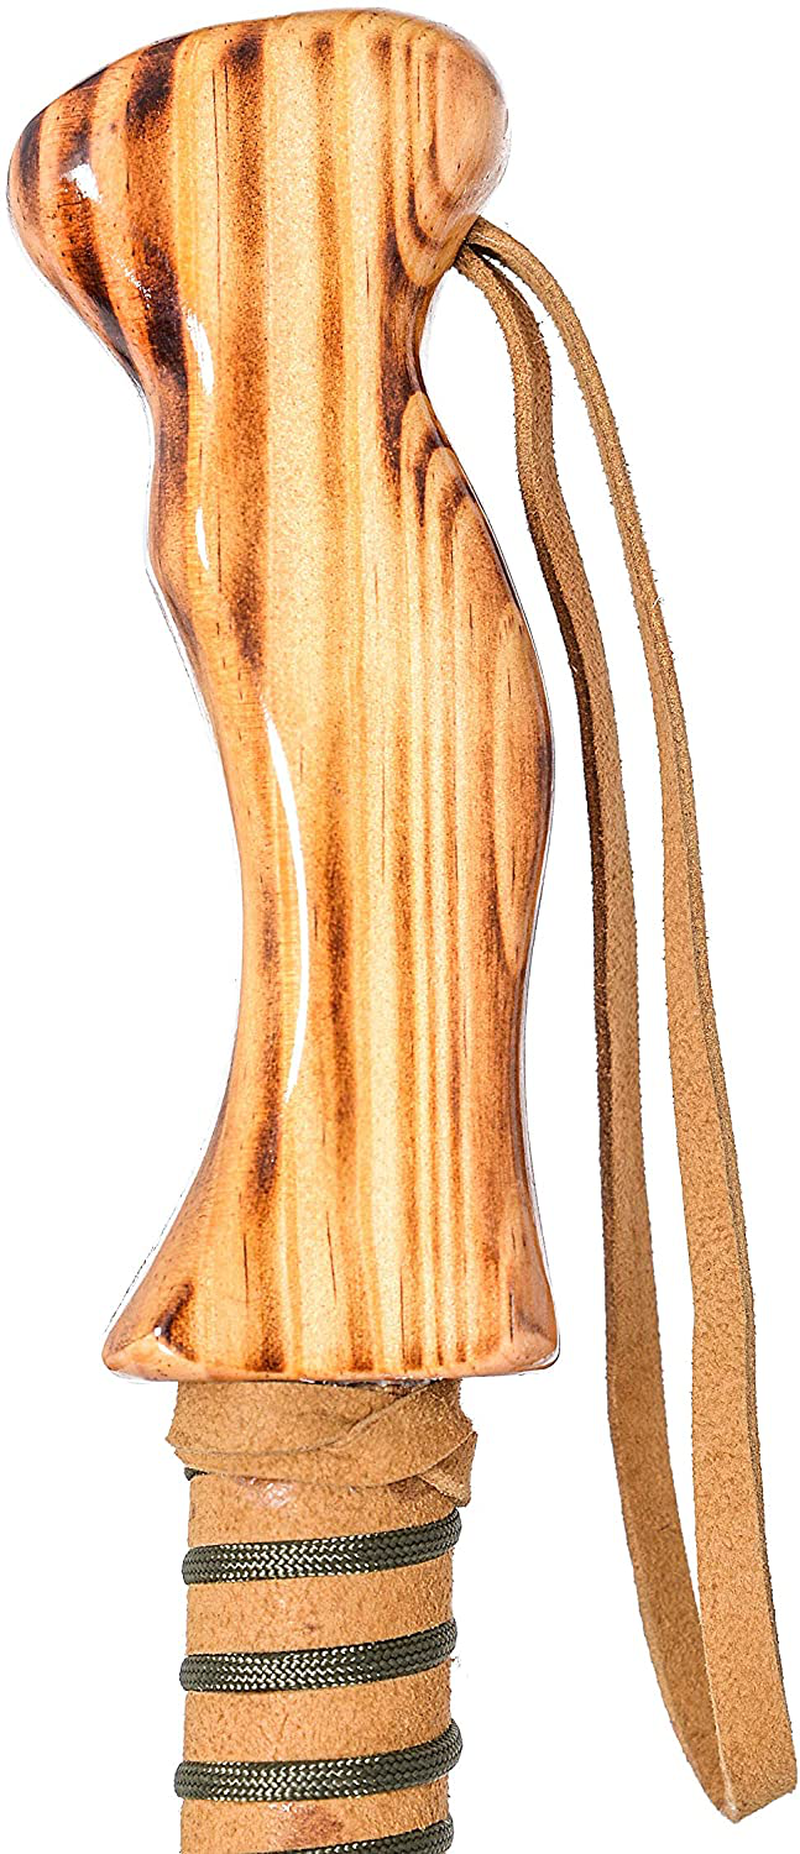 FOREST PILOT 3 Pieces Detachable Hardwood Walking Stick Pine Handle with a Compass (Nature Color, 55 Inches, 1 Piece)